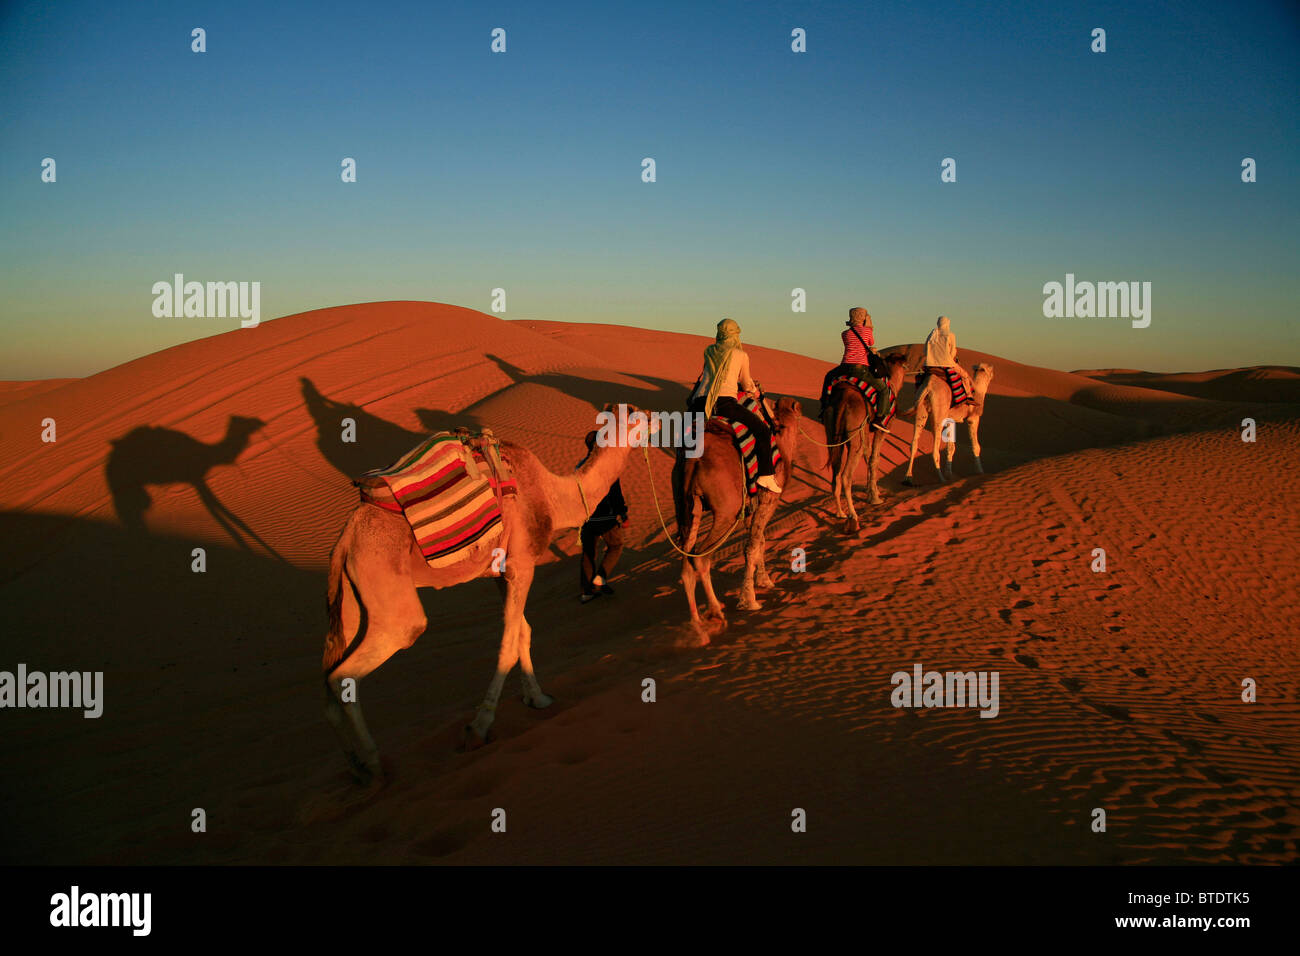 Camel trek at sunset in the sand dunes Stock Photo